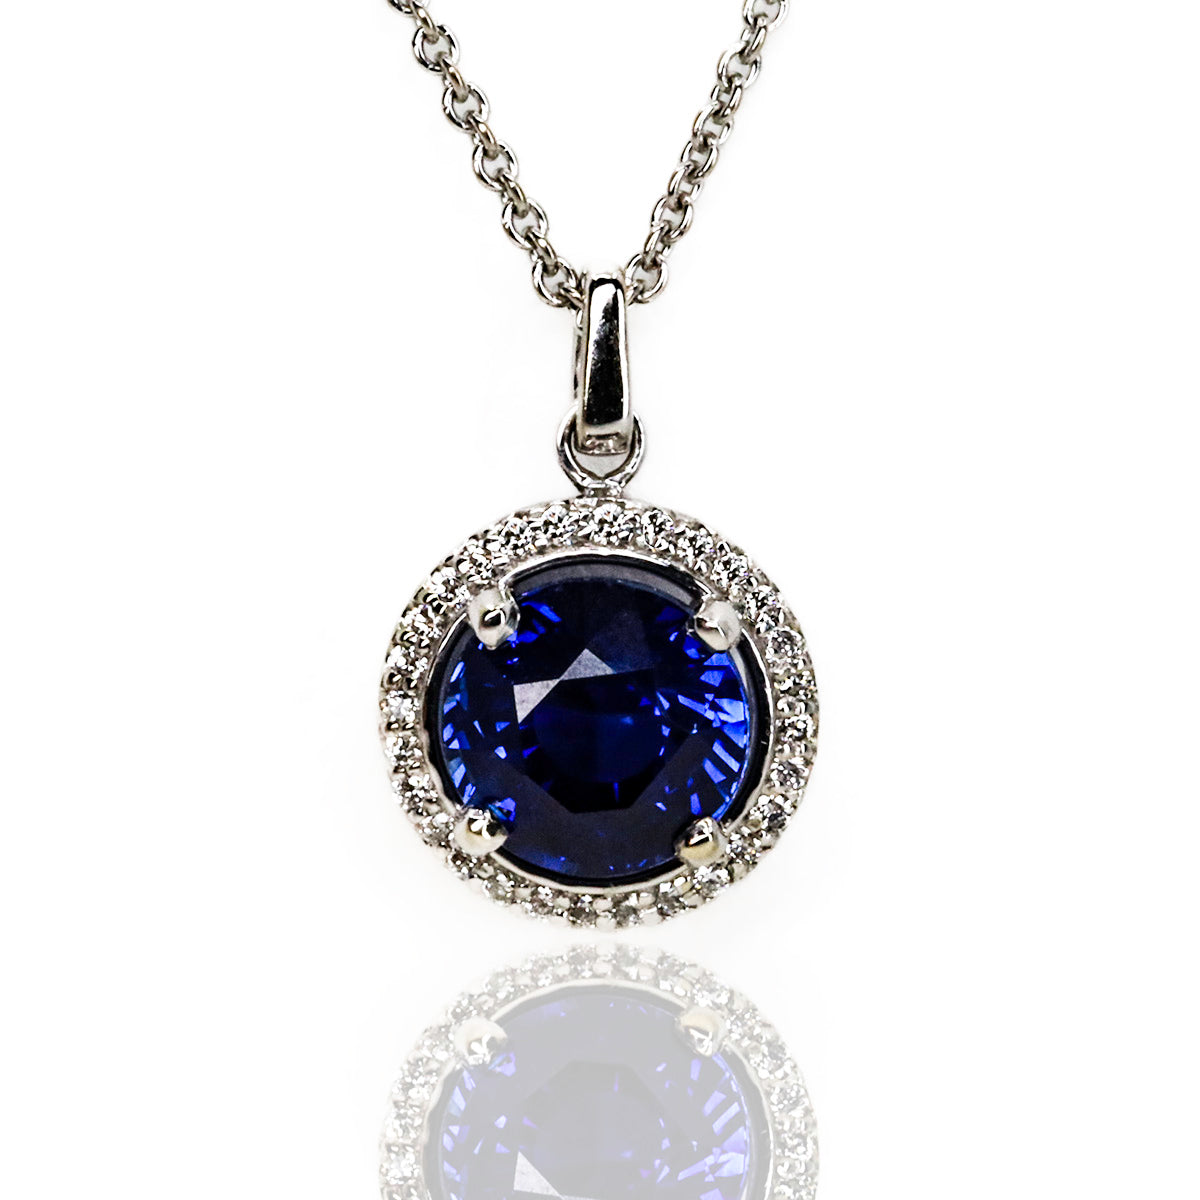 3.01 Carat Vidi Royal Blue Sapphire Necklace